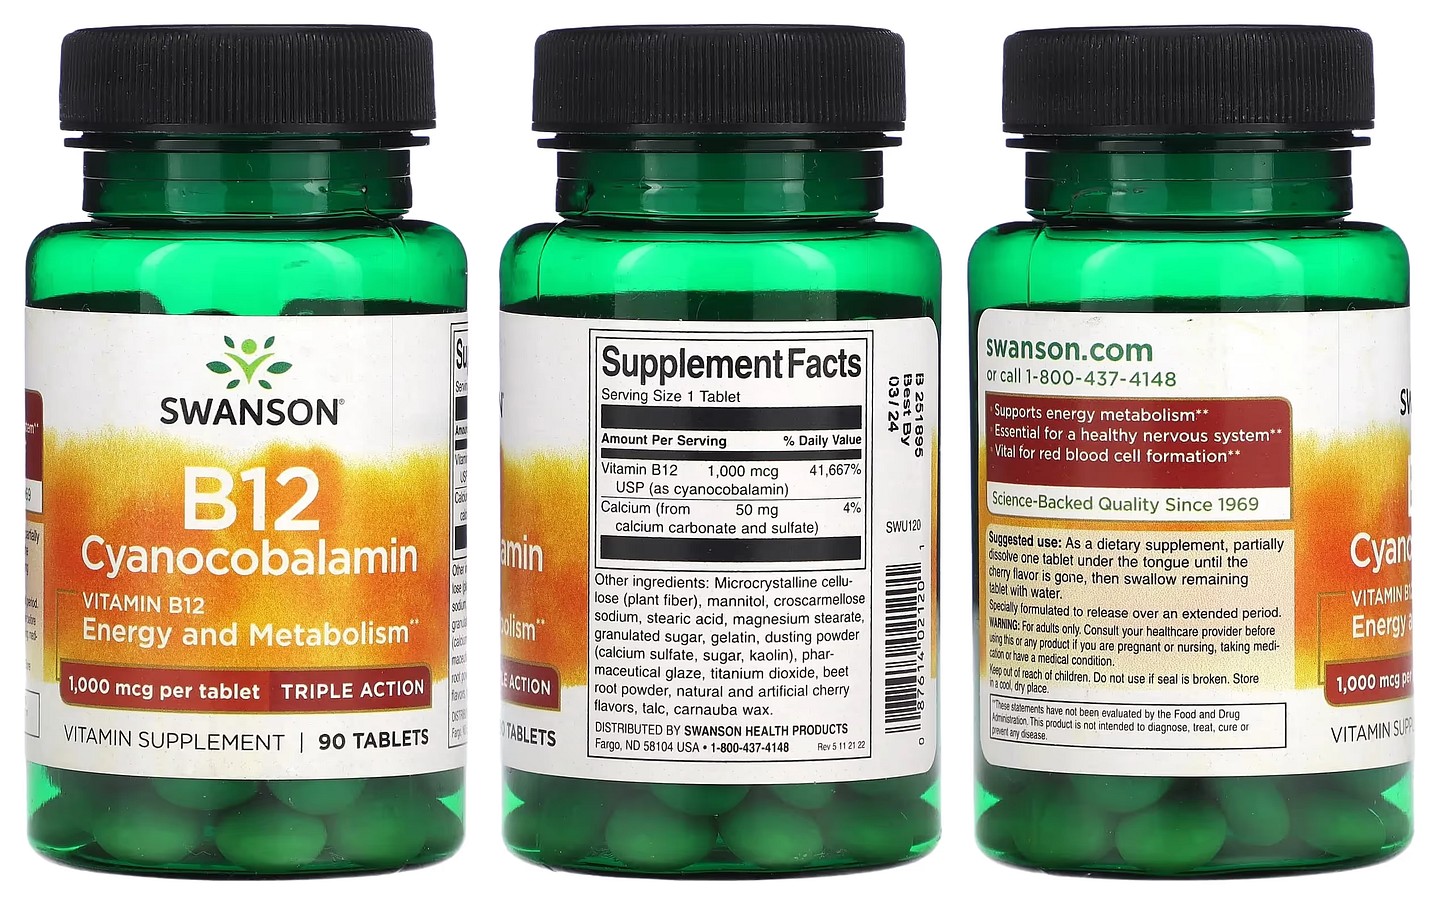 Swanson, Vitamin B12 Cyanocobalamin packaging